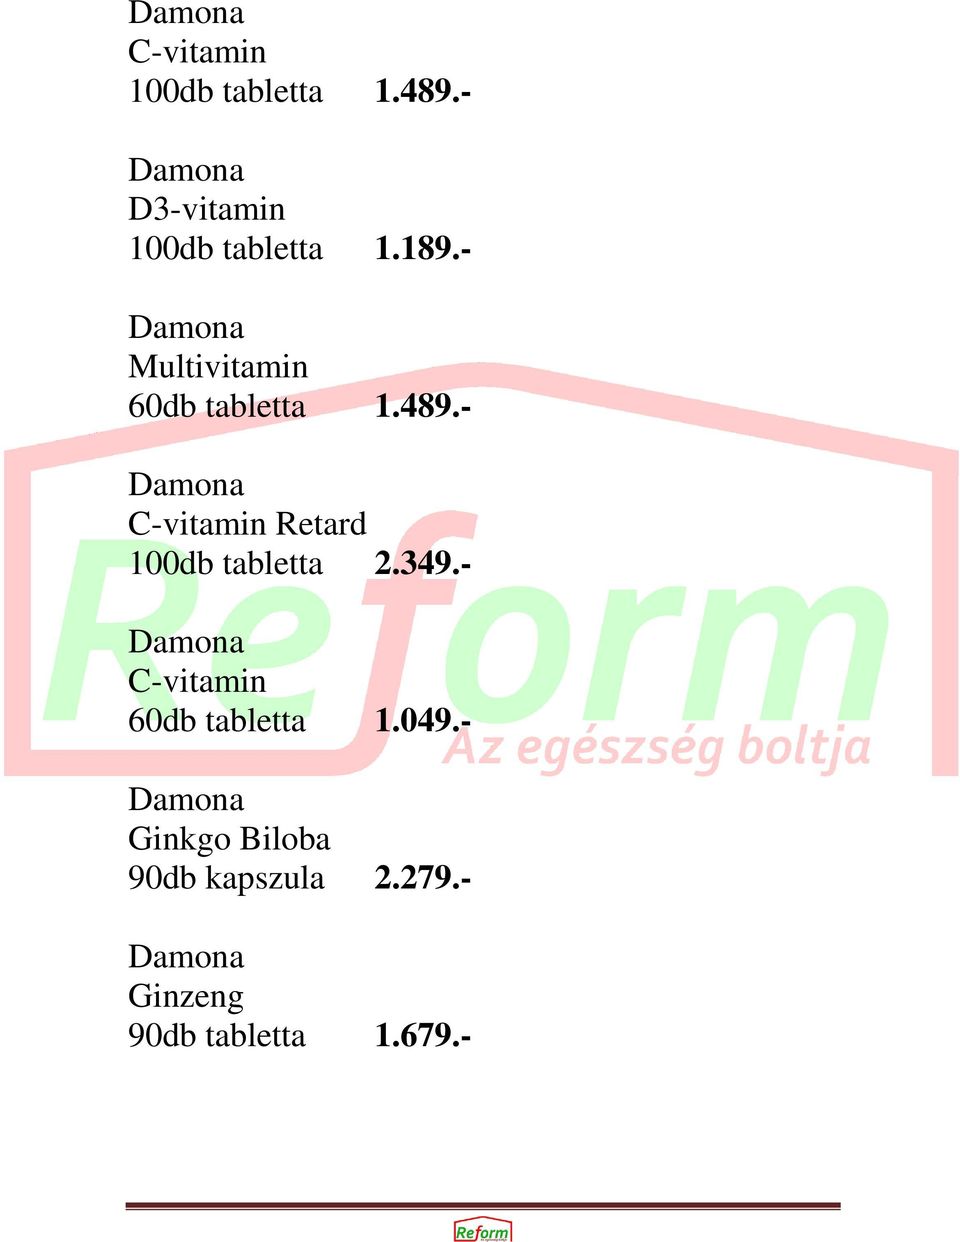 - Damona Multivitamin 60db tabletta 1.489.